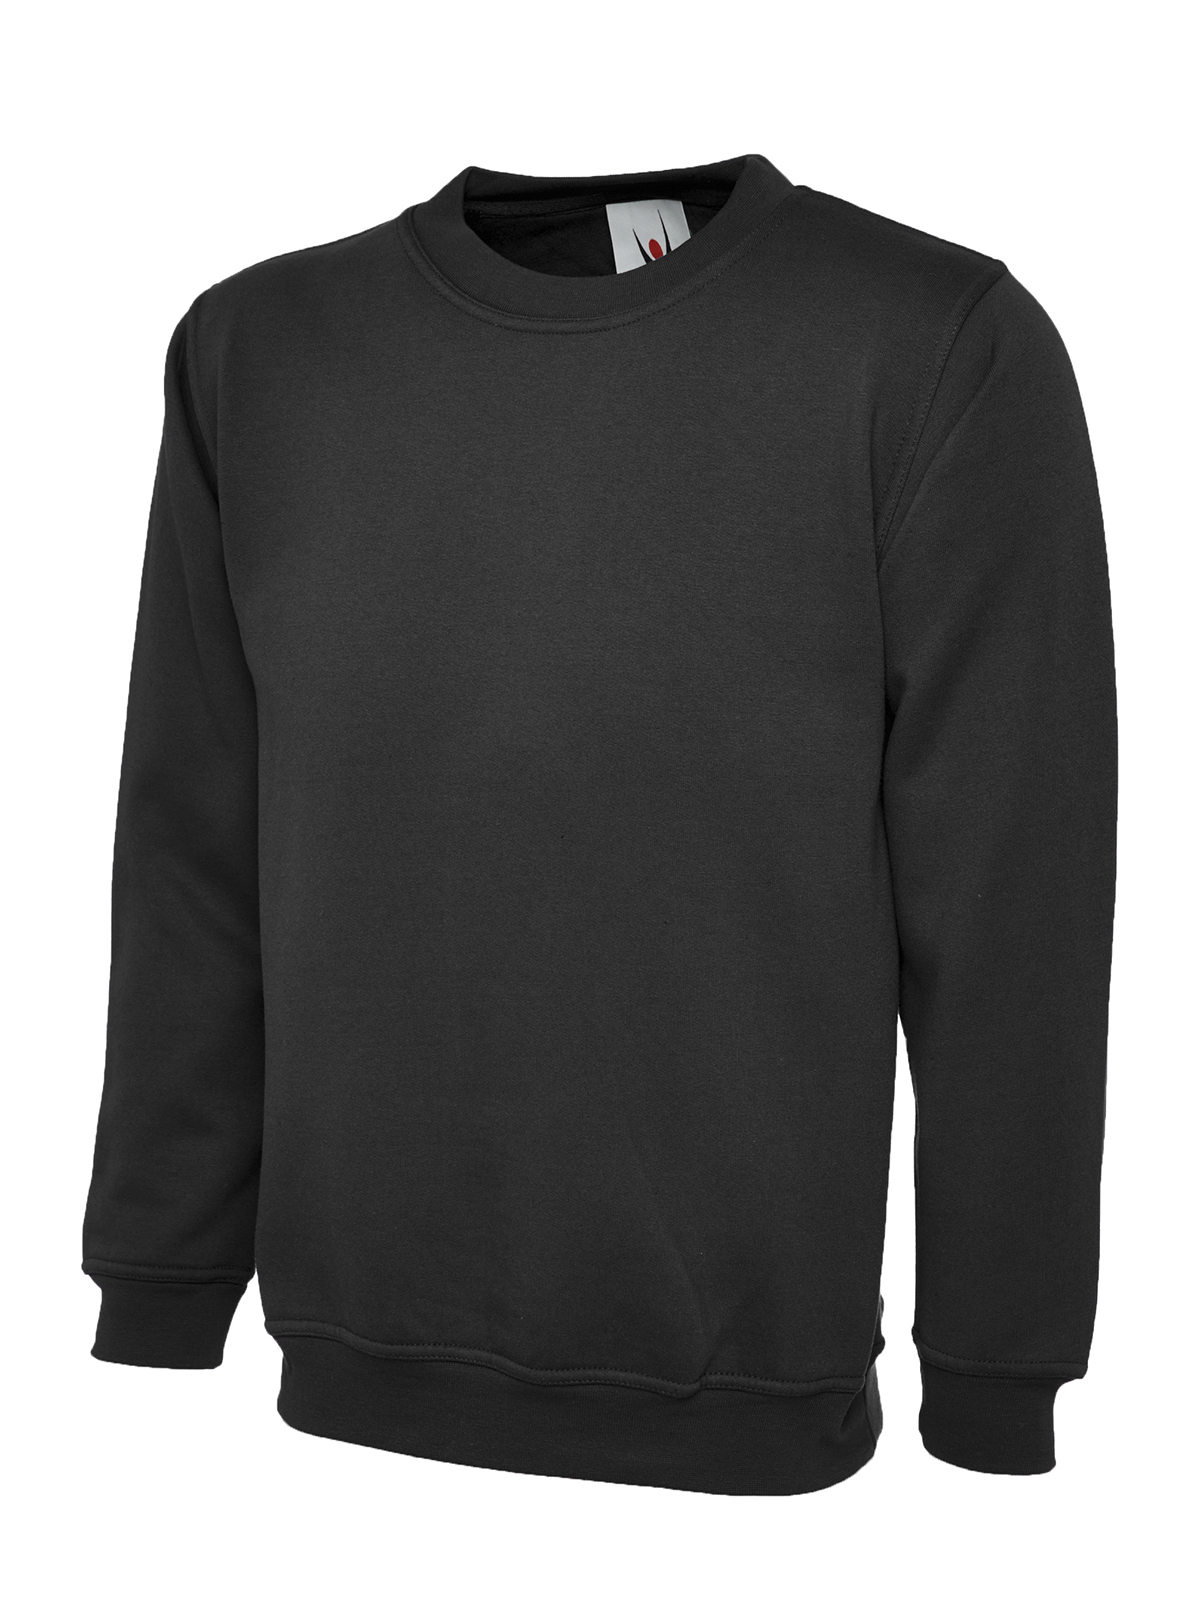 Uc203 300gsm classic sweatshirt - black - large